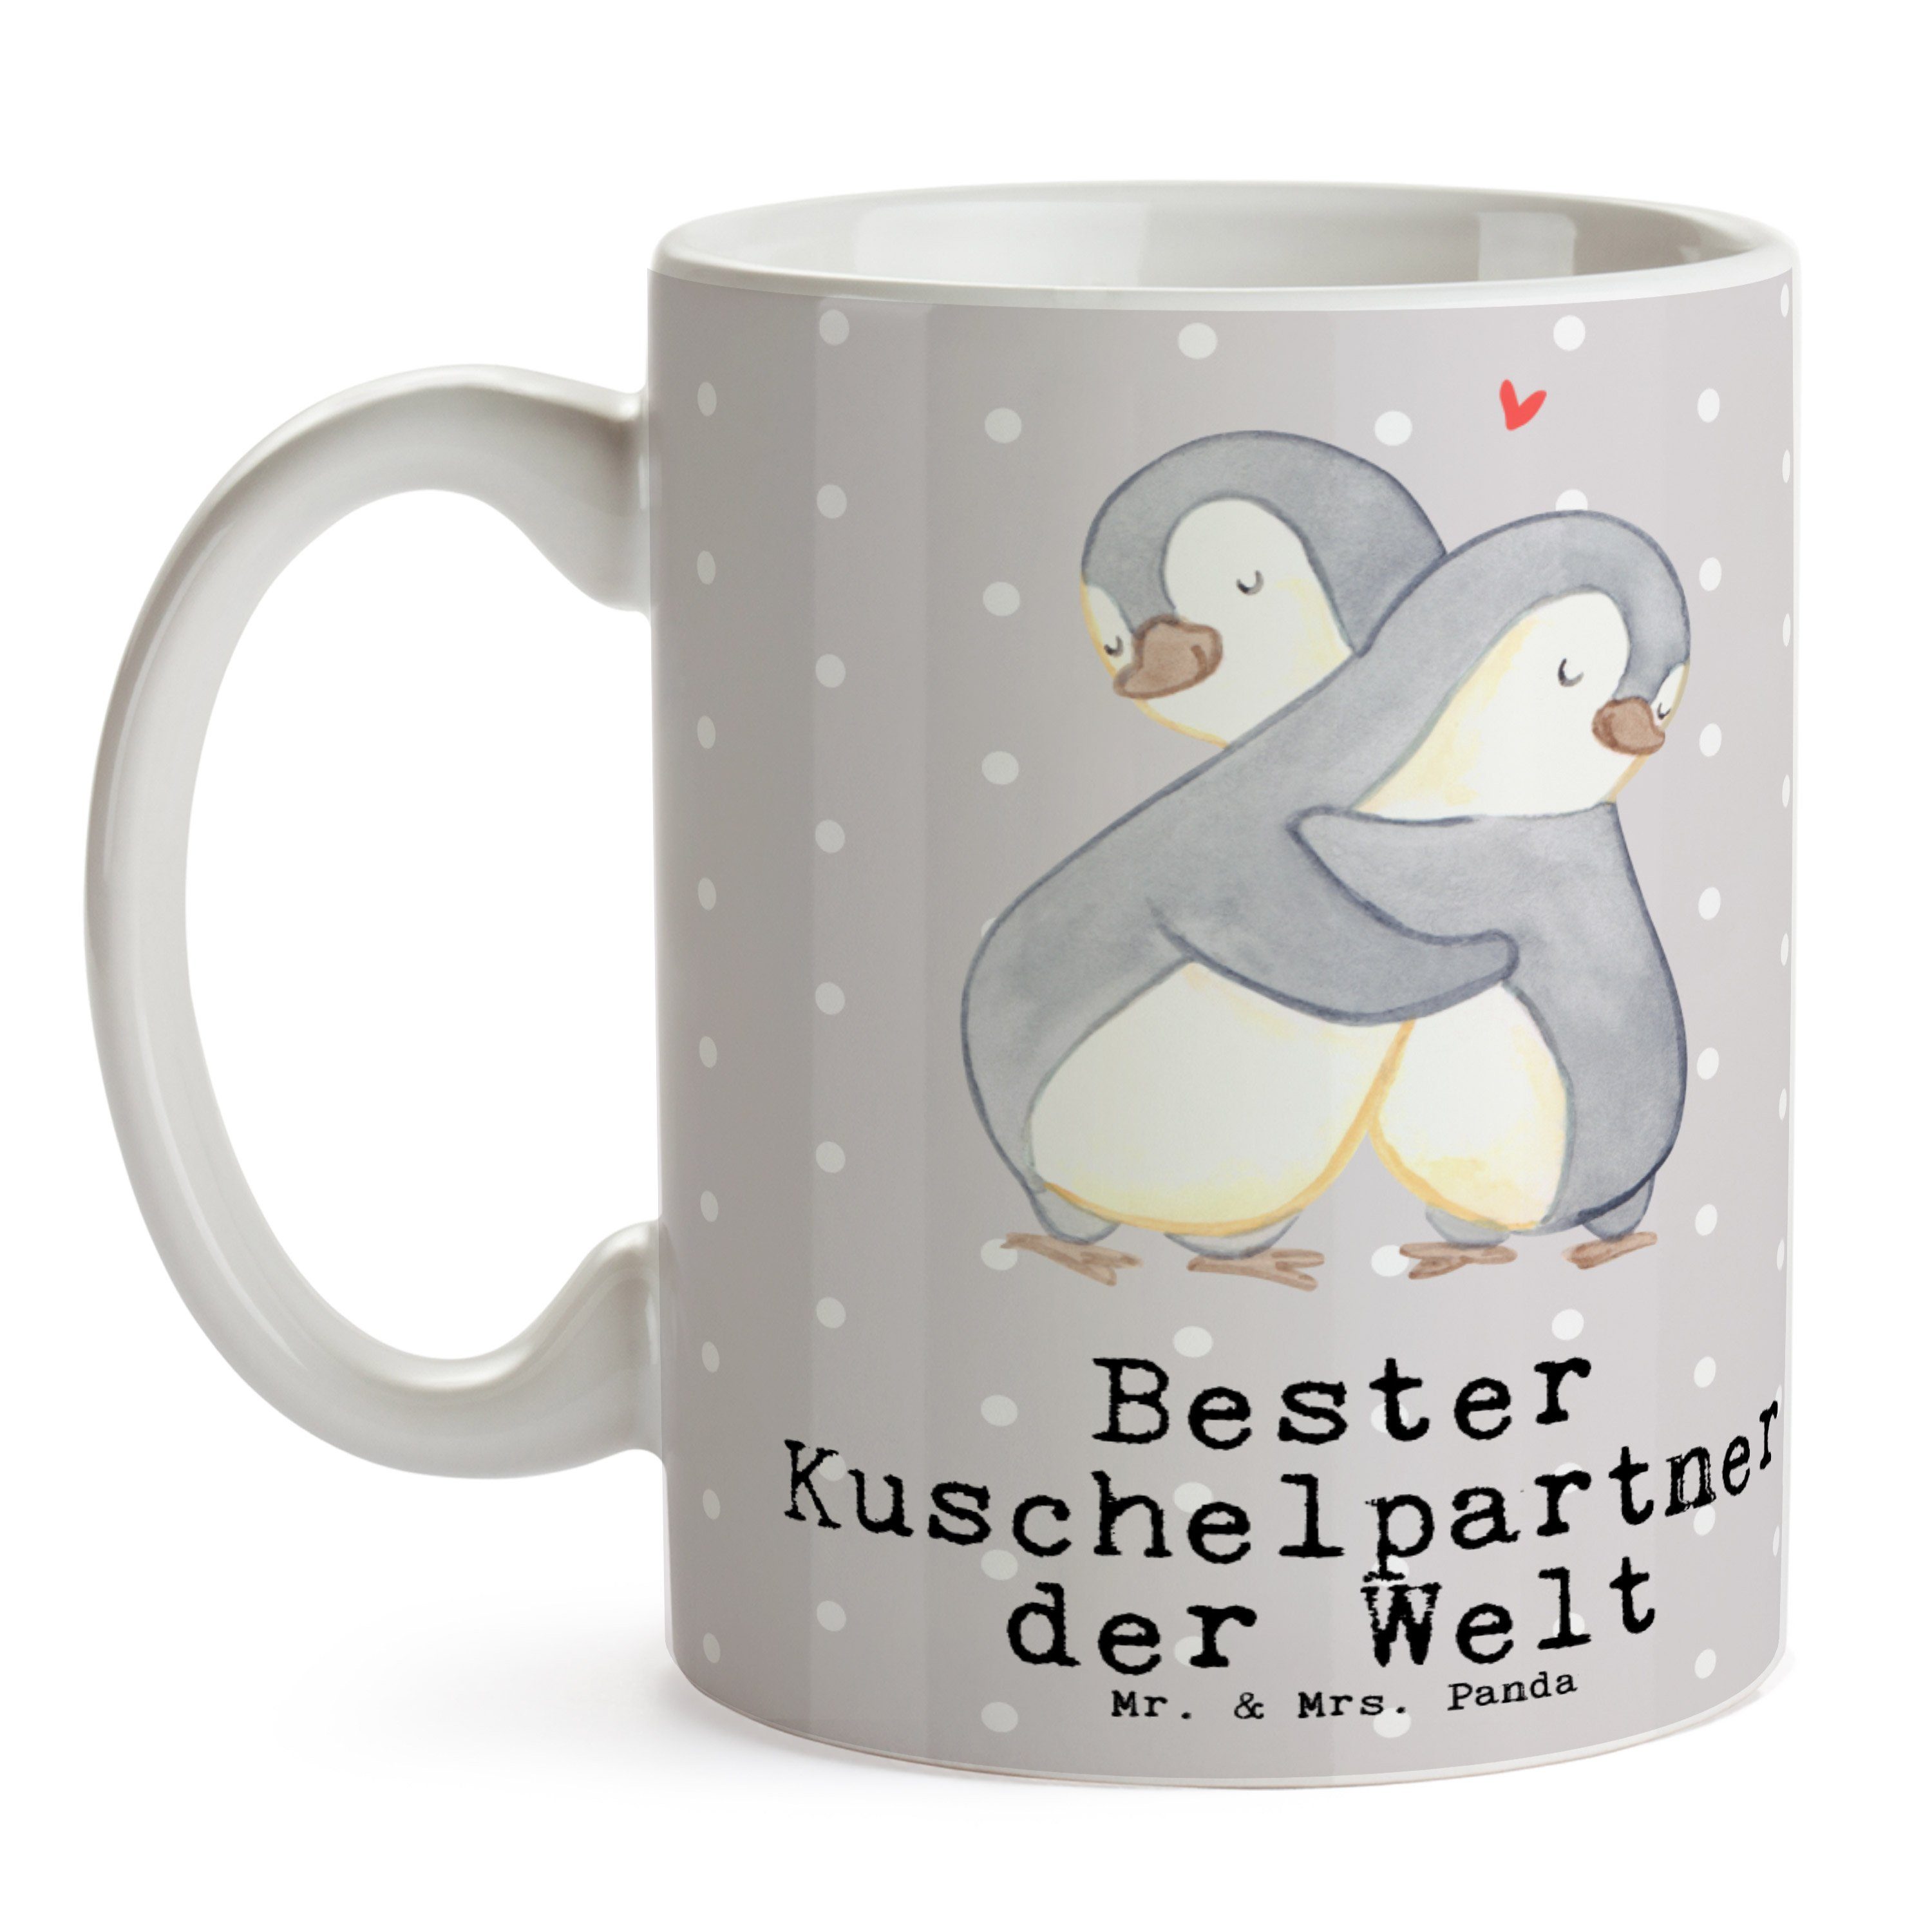 Kuschelpartner Welt der Mrs. Grau Panda - Bester - Tasse Keramik Kaf, Pinguin Mr. Pastell Geschenk, &